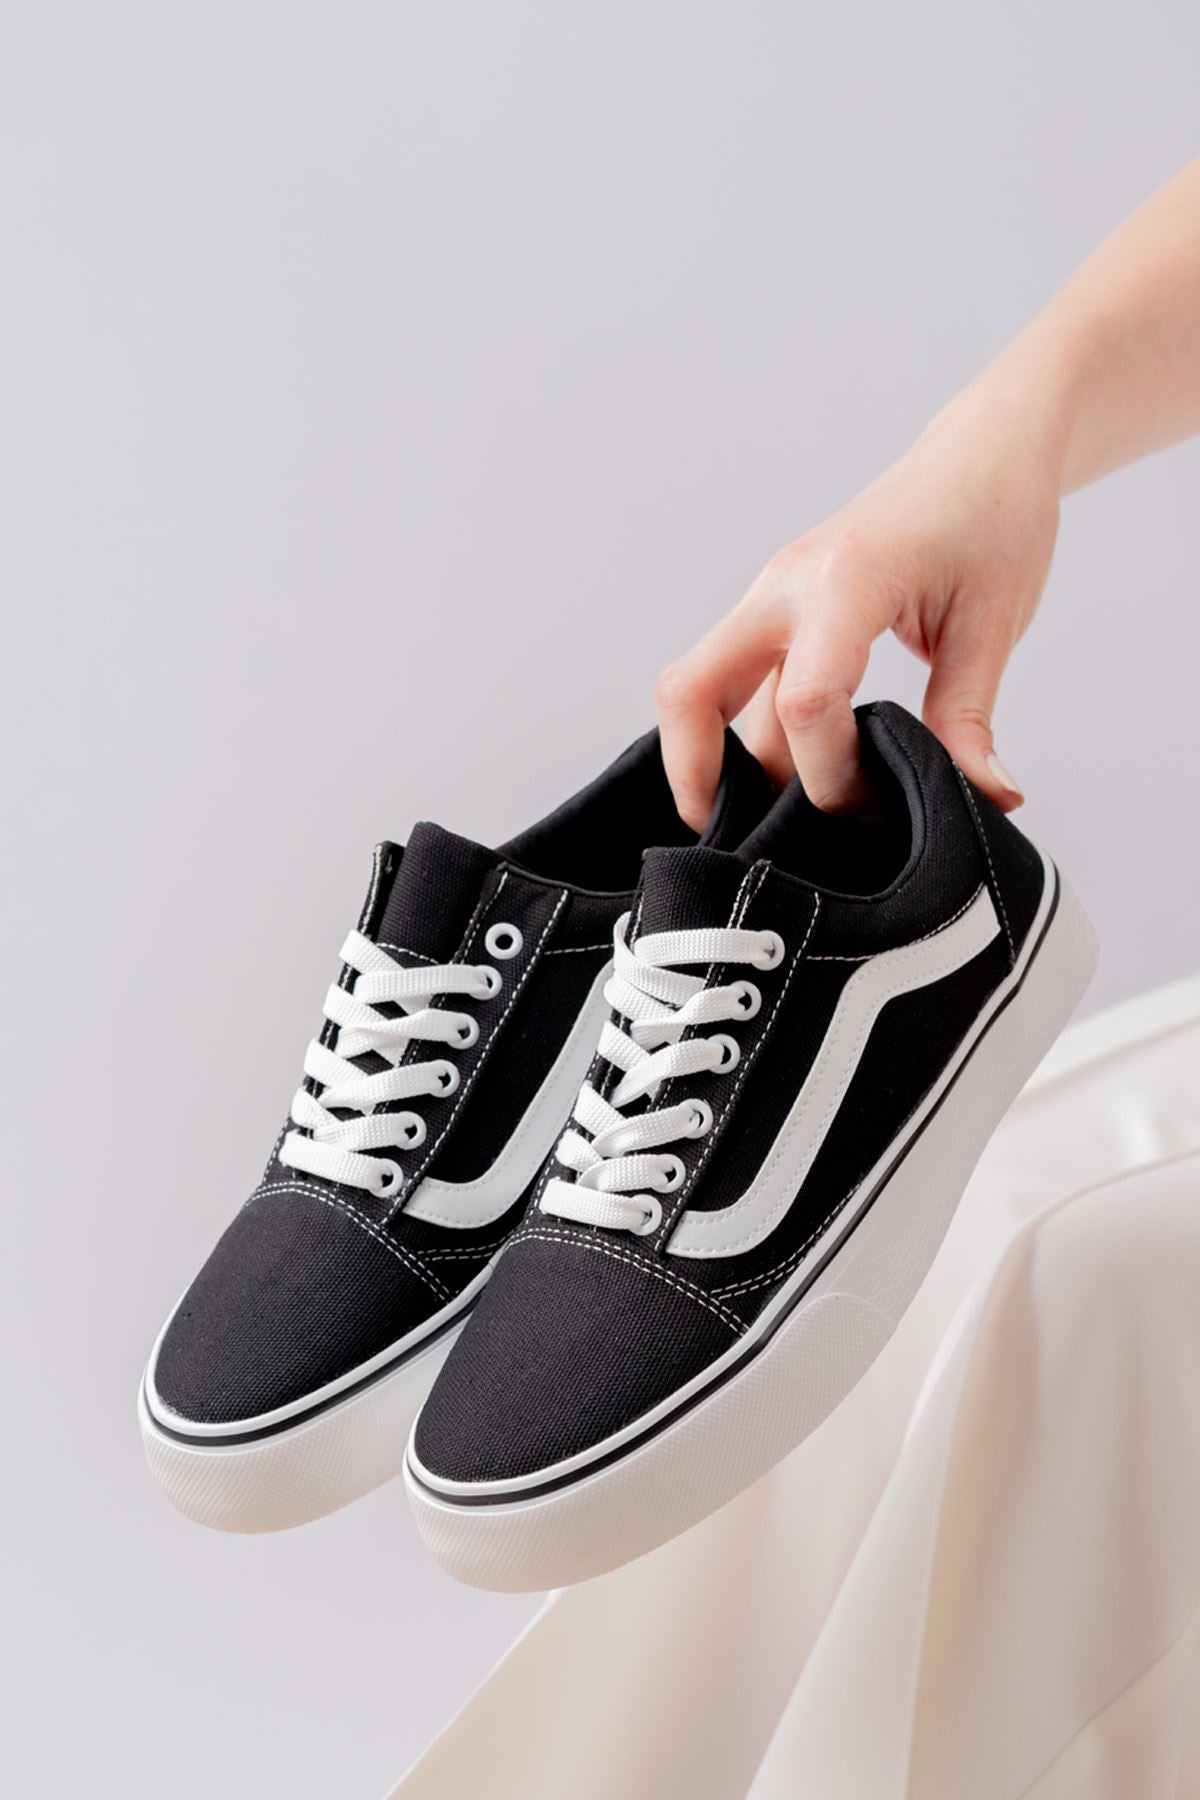 Women's Yukie Black Sneakers Sport Shoes - STREETMODE ™